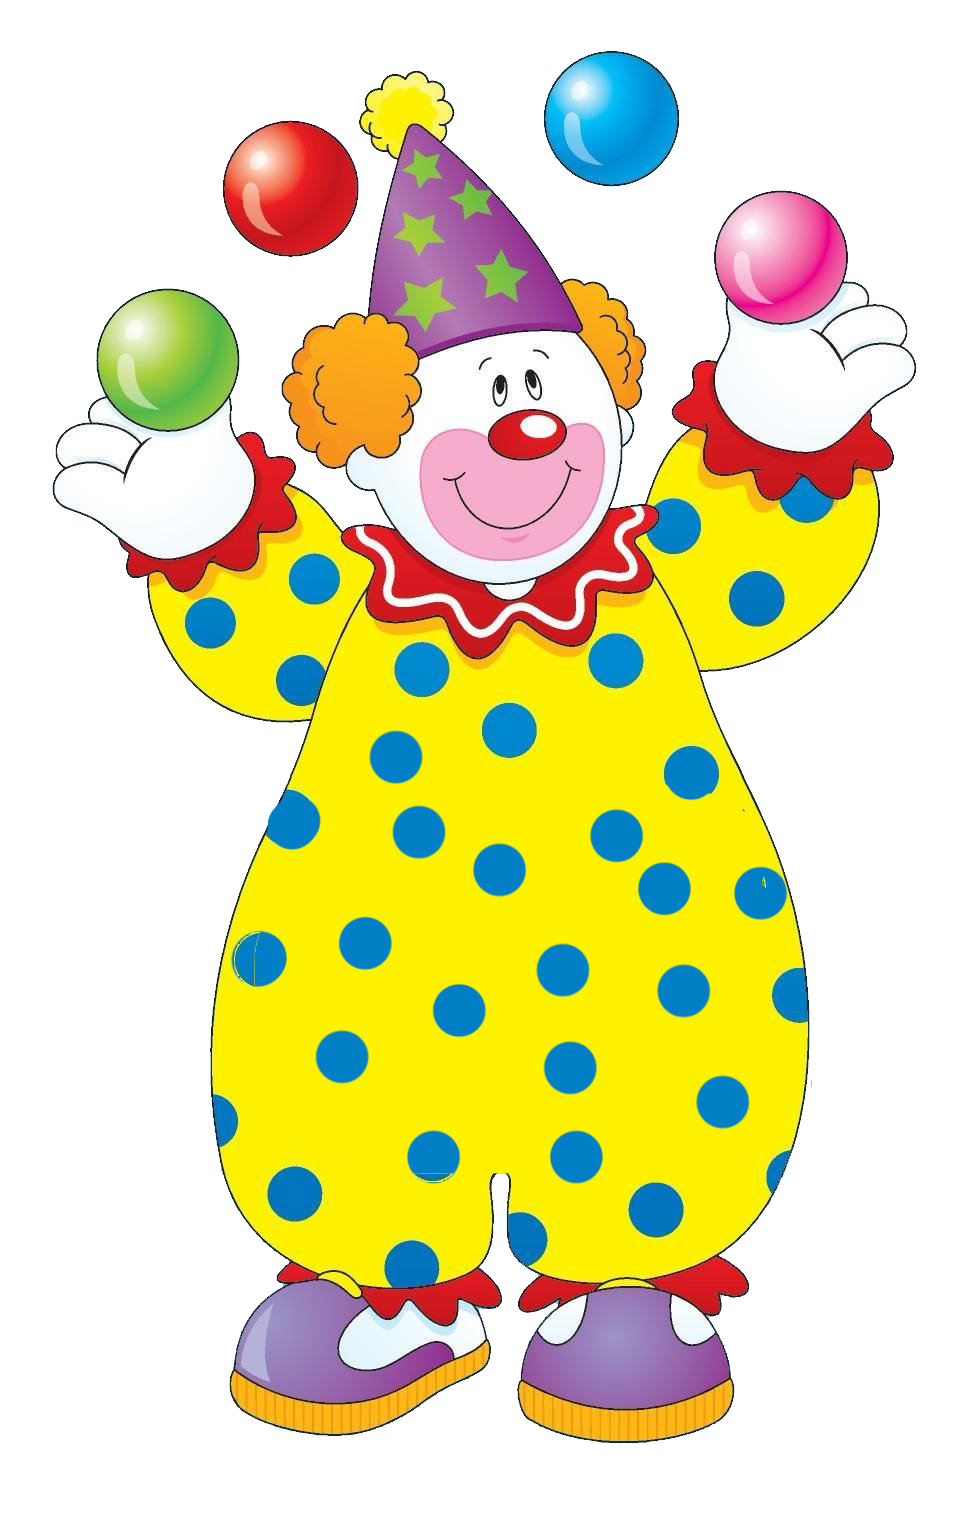 Клоун шаблон цветной. Клоуны для детей. Весёлые клоуны. Клоун рисунок. Веселый клоун для детей.